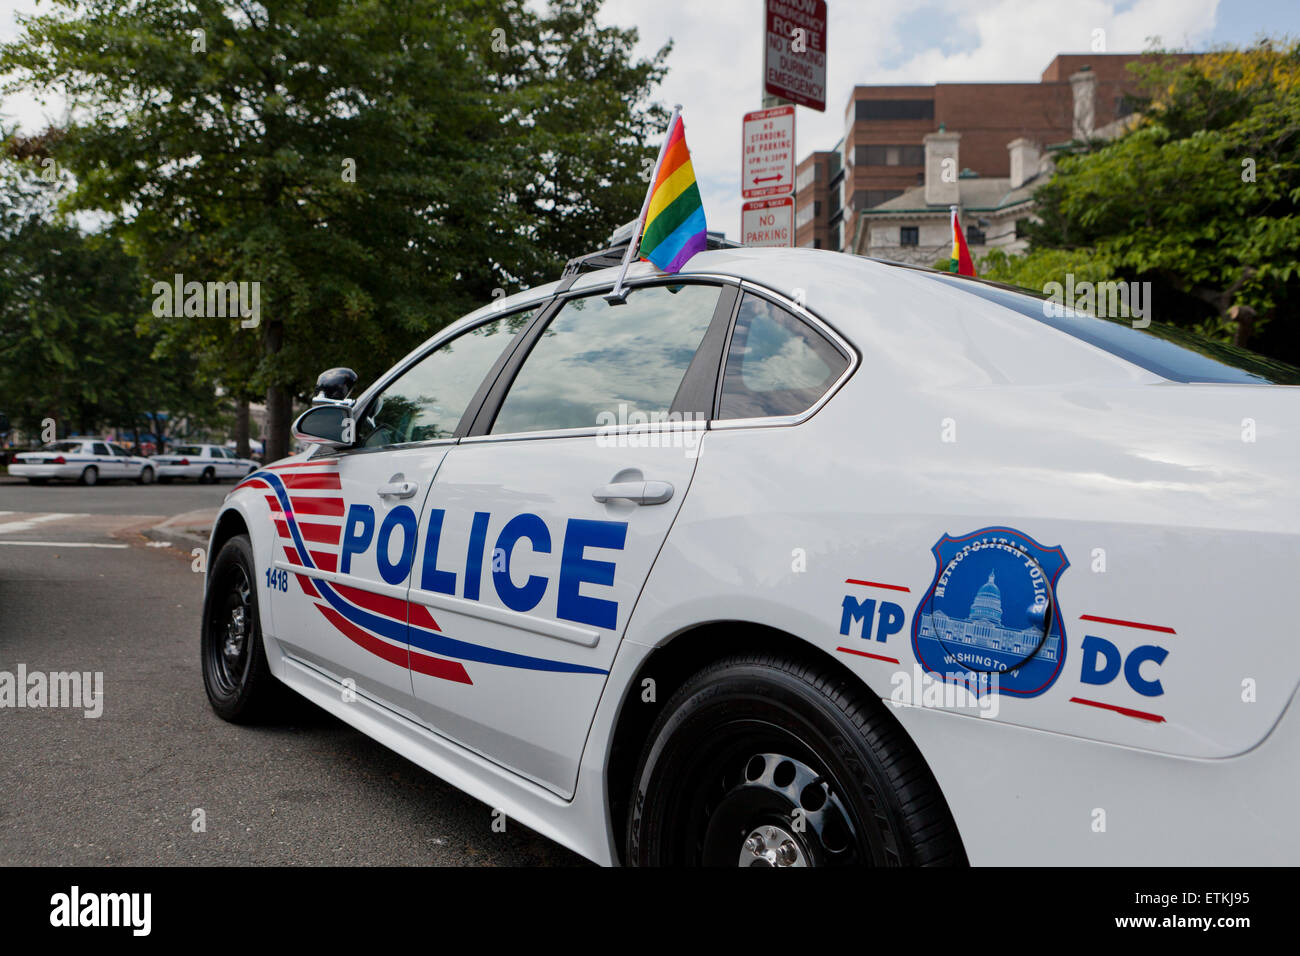 Police cruiser with rainbow flag - Washington, DC USA Stock Photo